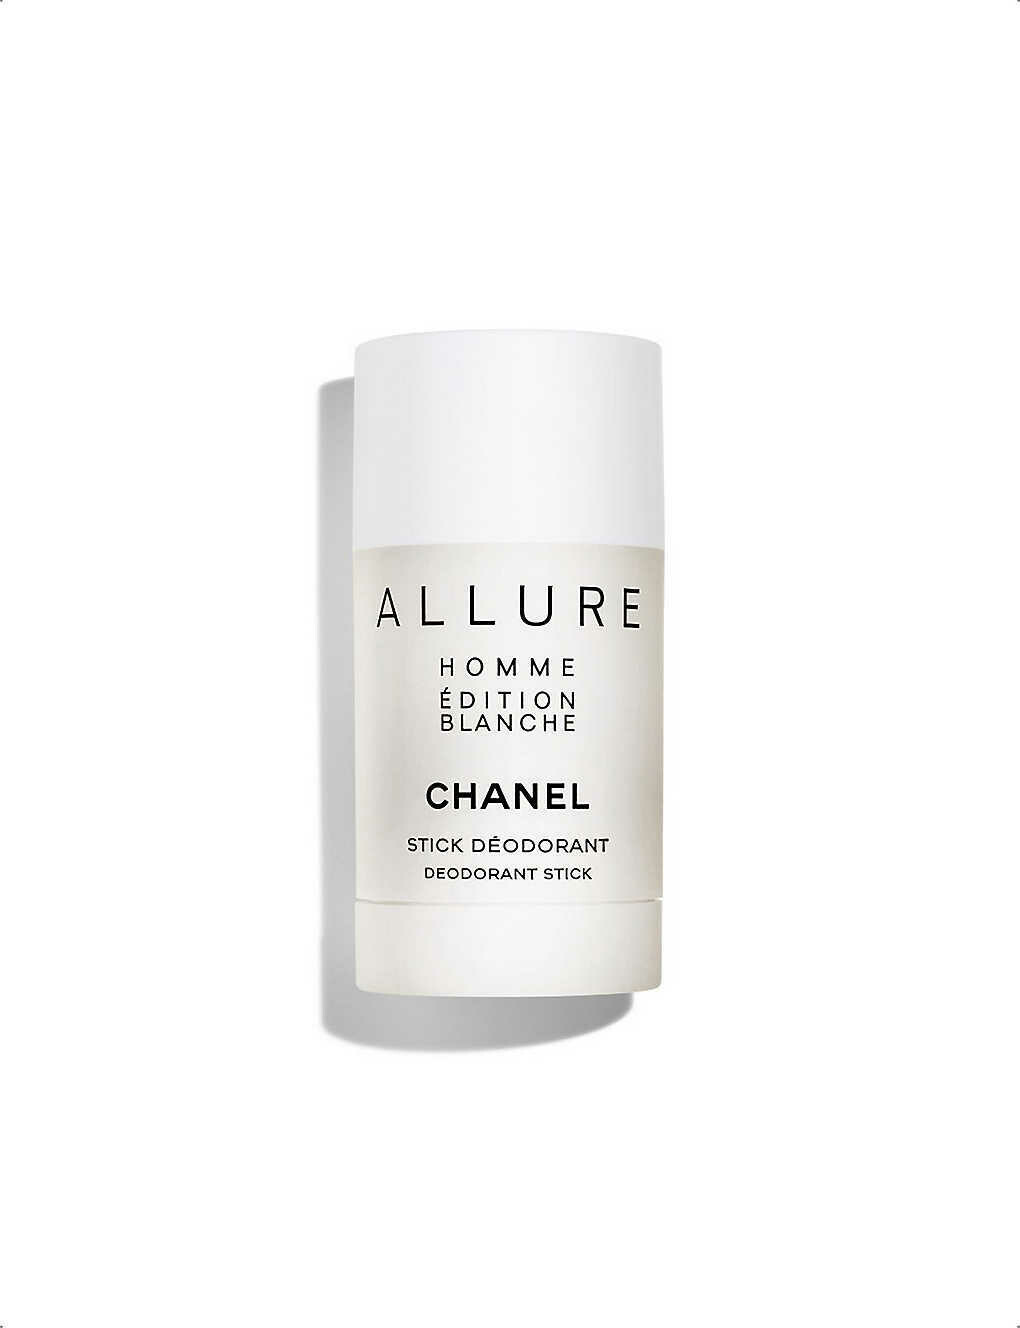 Chanel Allure Homme Edition Blanche Deodorant Stick 75g